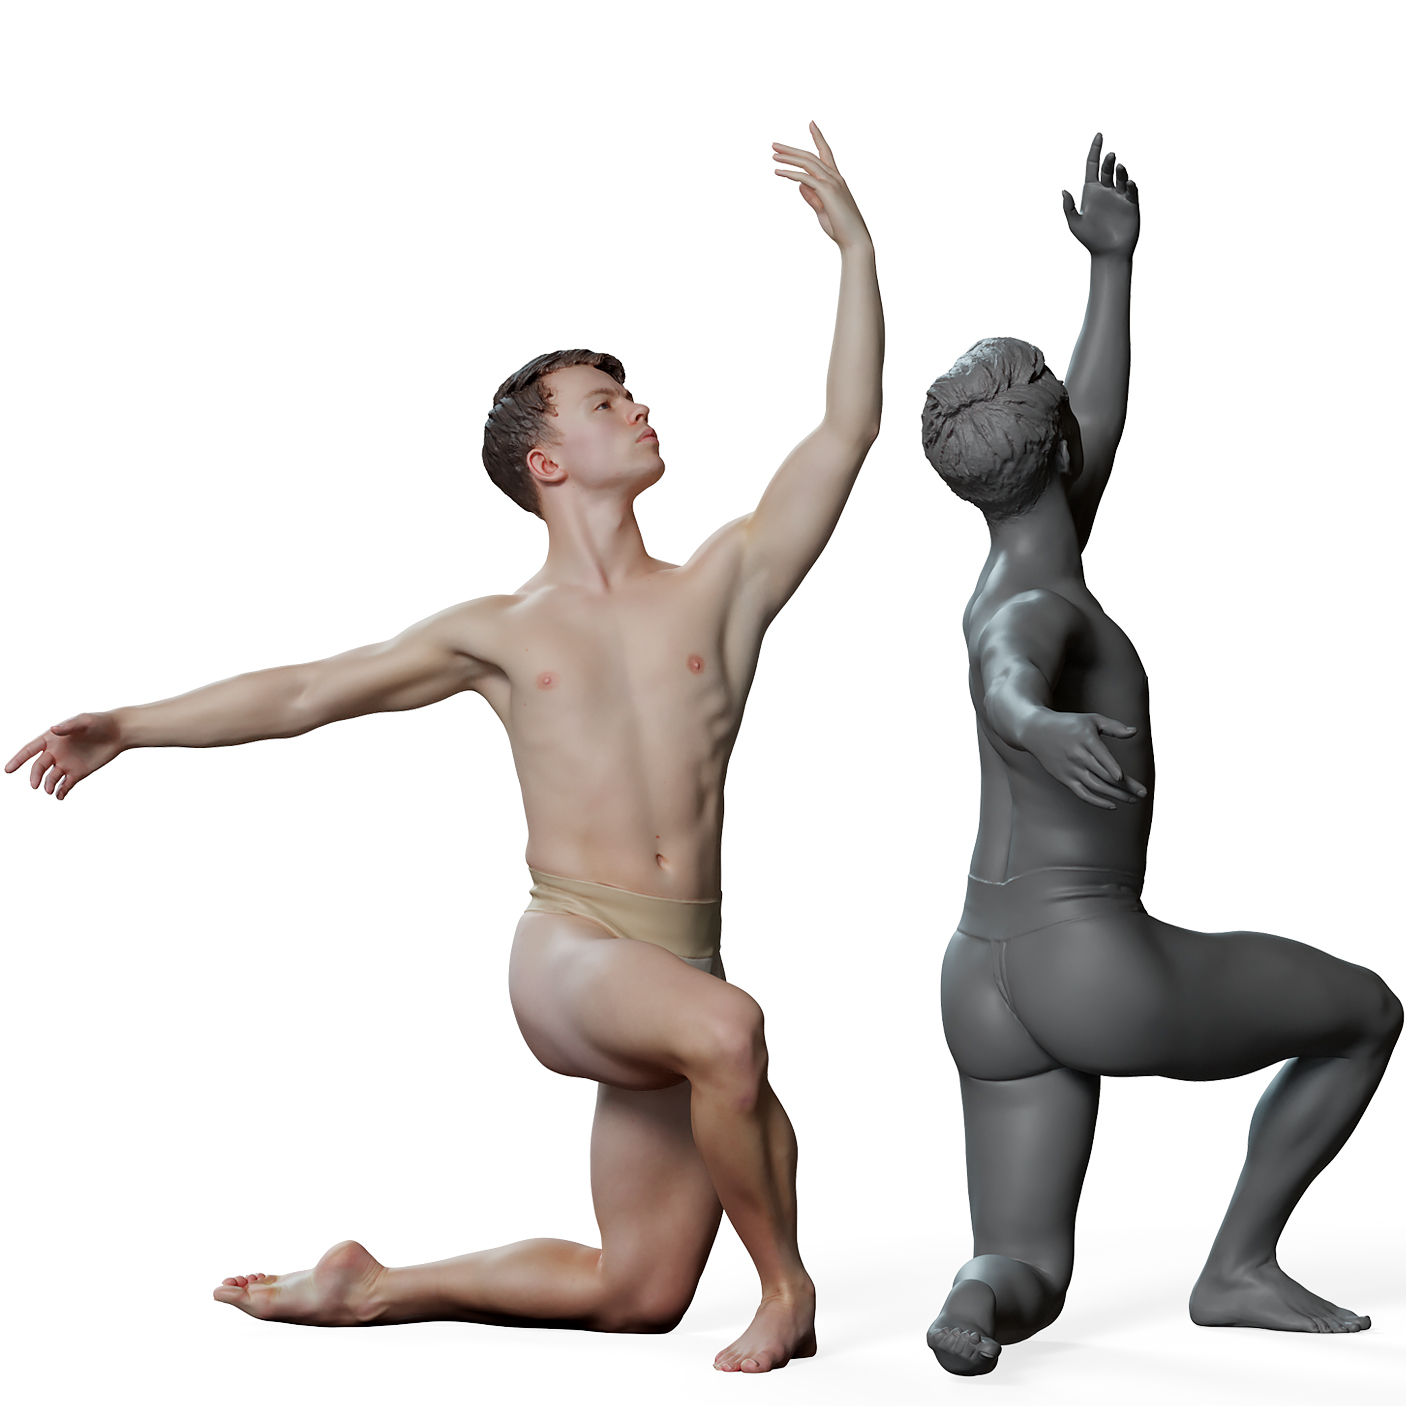 Male ballet poses study by sylmoira on DeviantArt